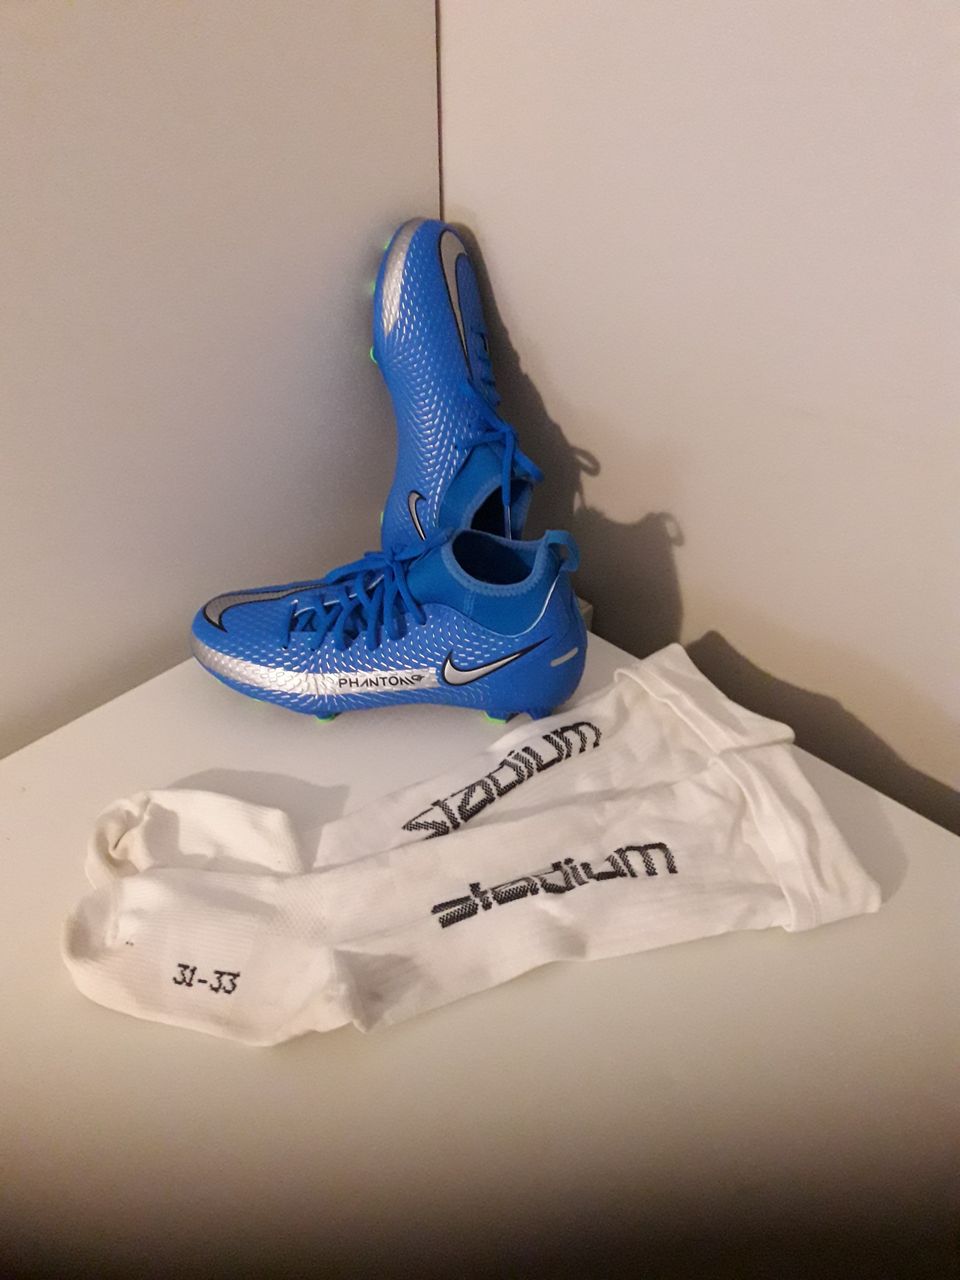 Uudet Nike Phantom Jr jalkapallokengät + sukat